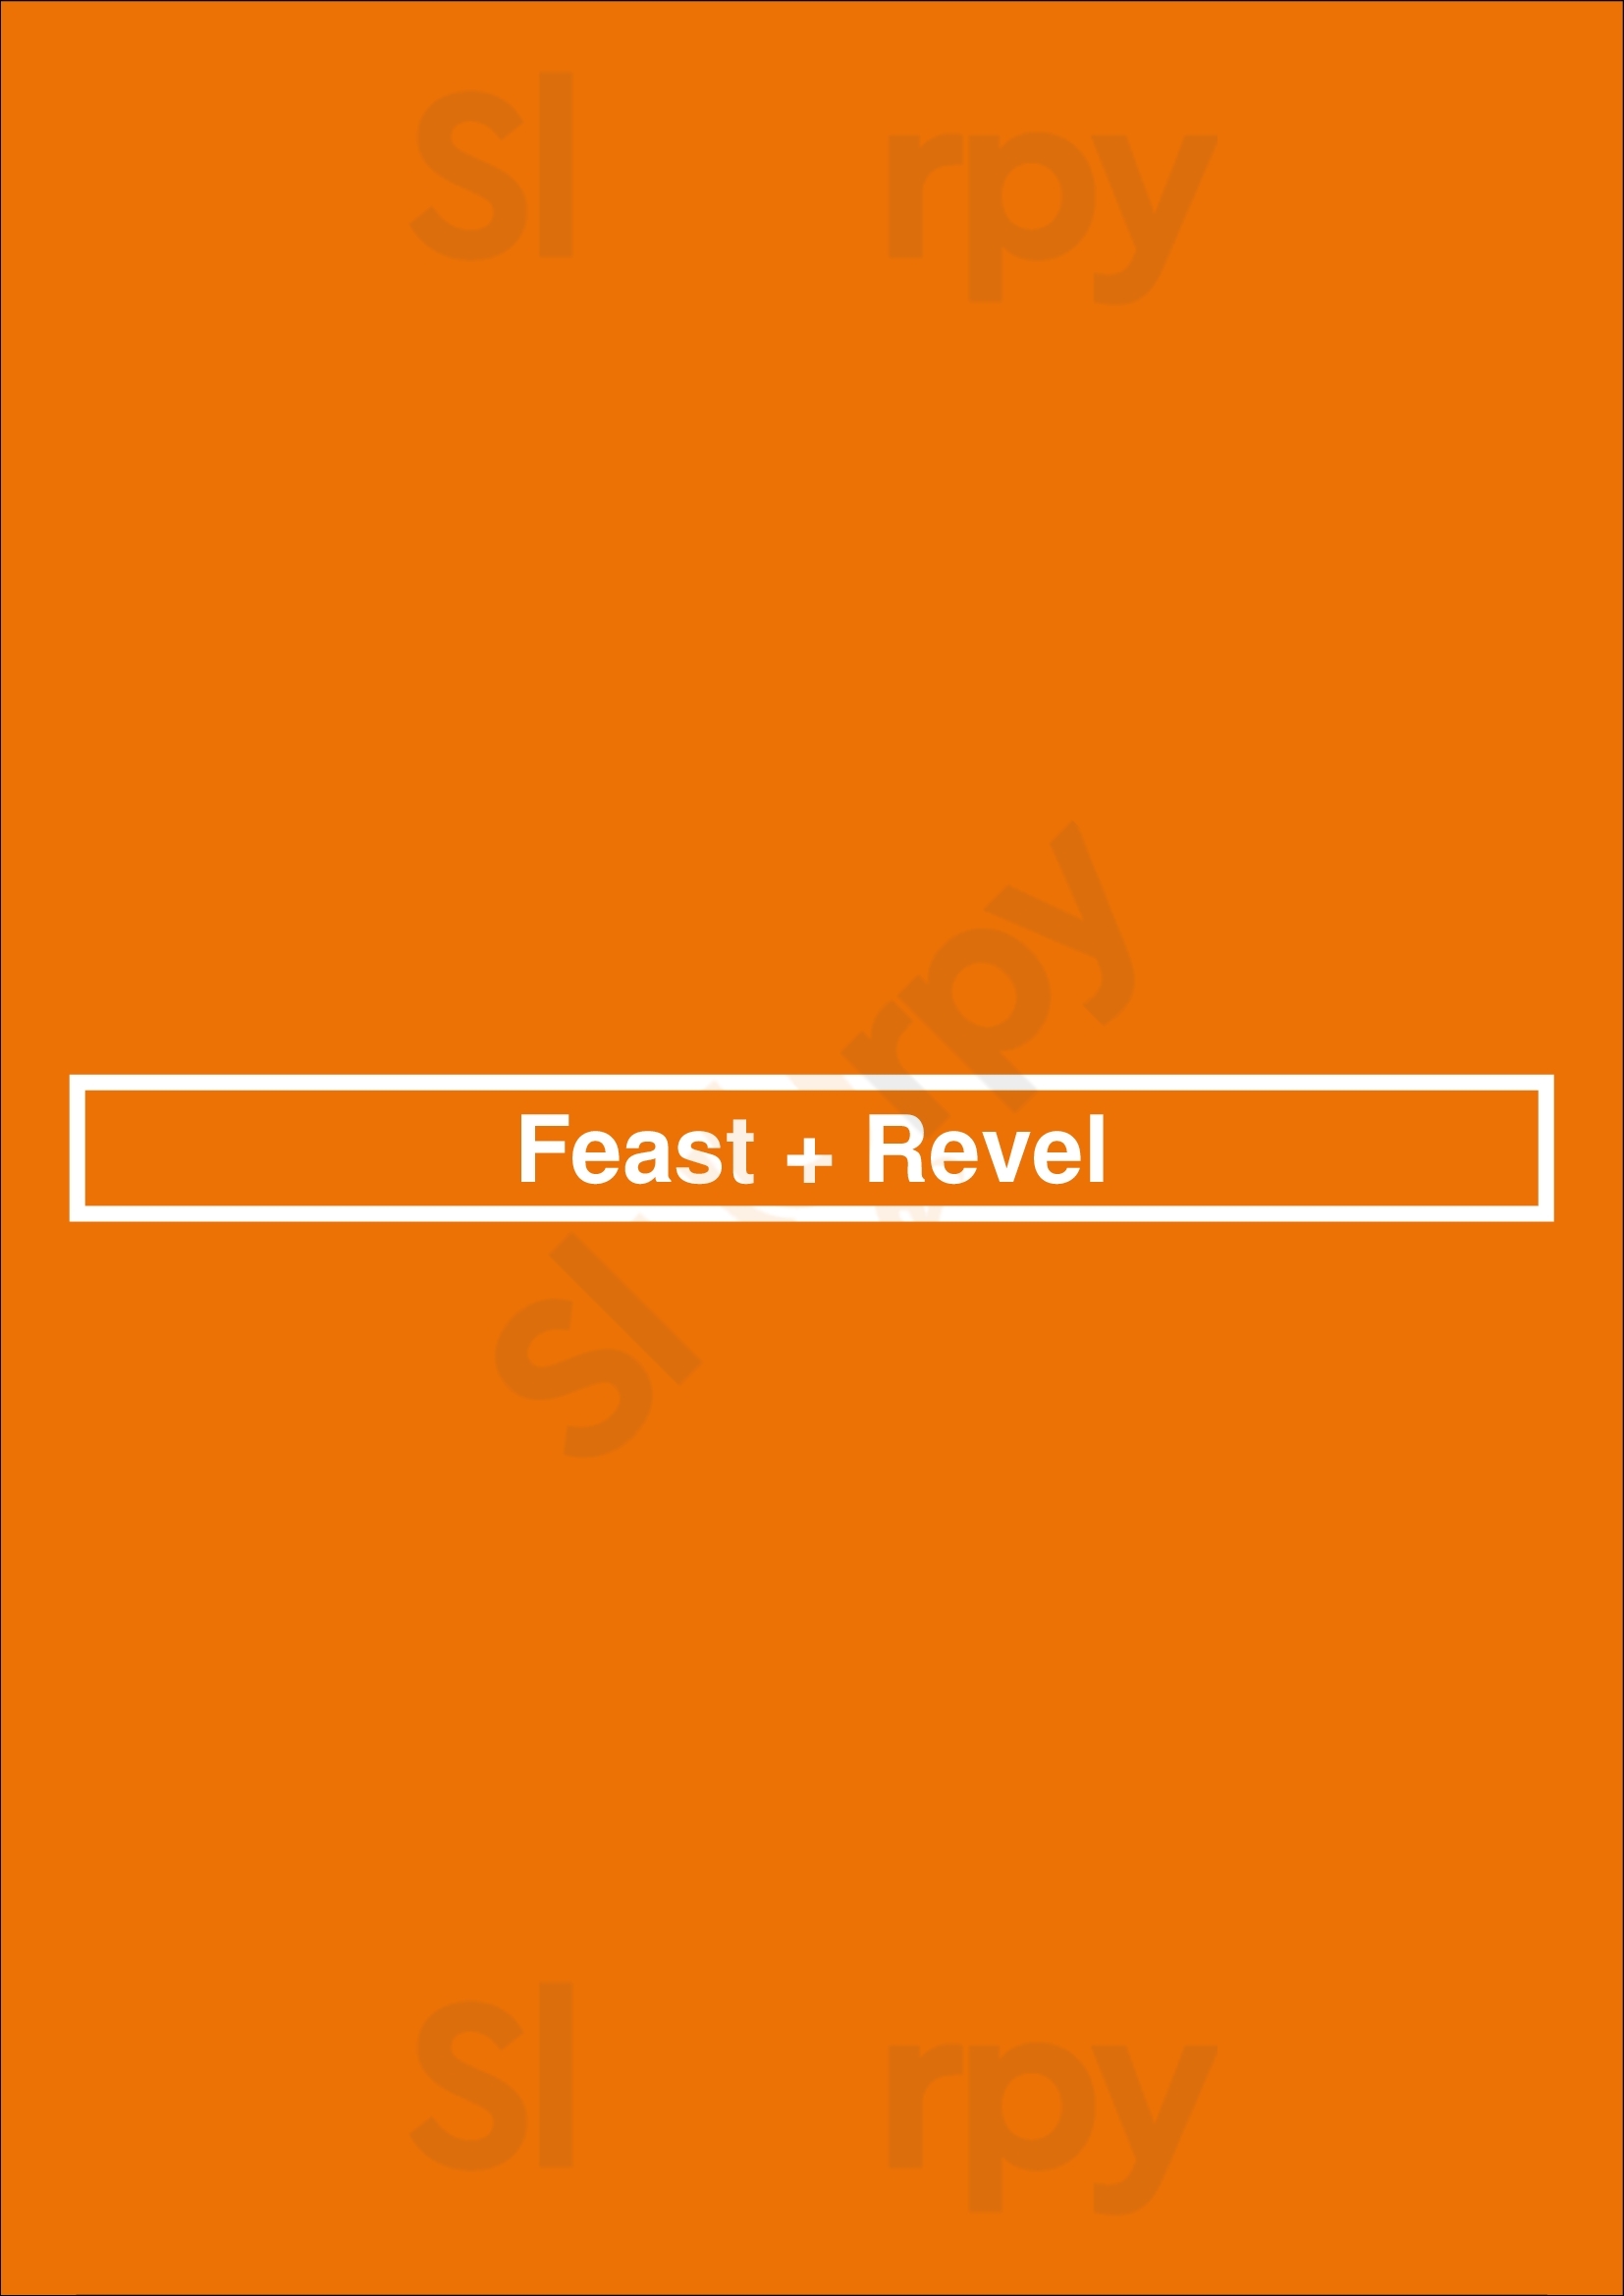 Feast + Revel Ottawa Menu - 1